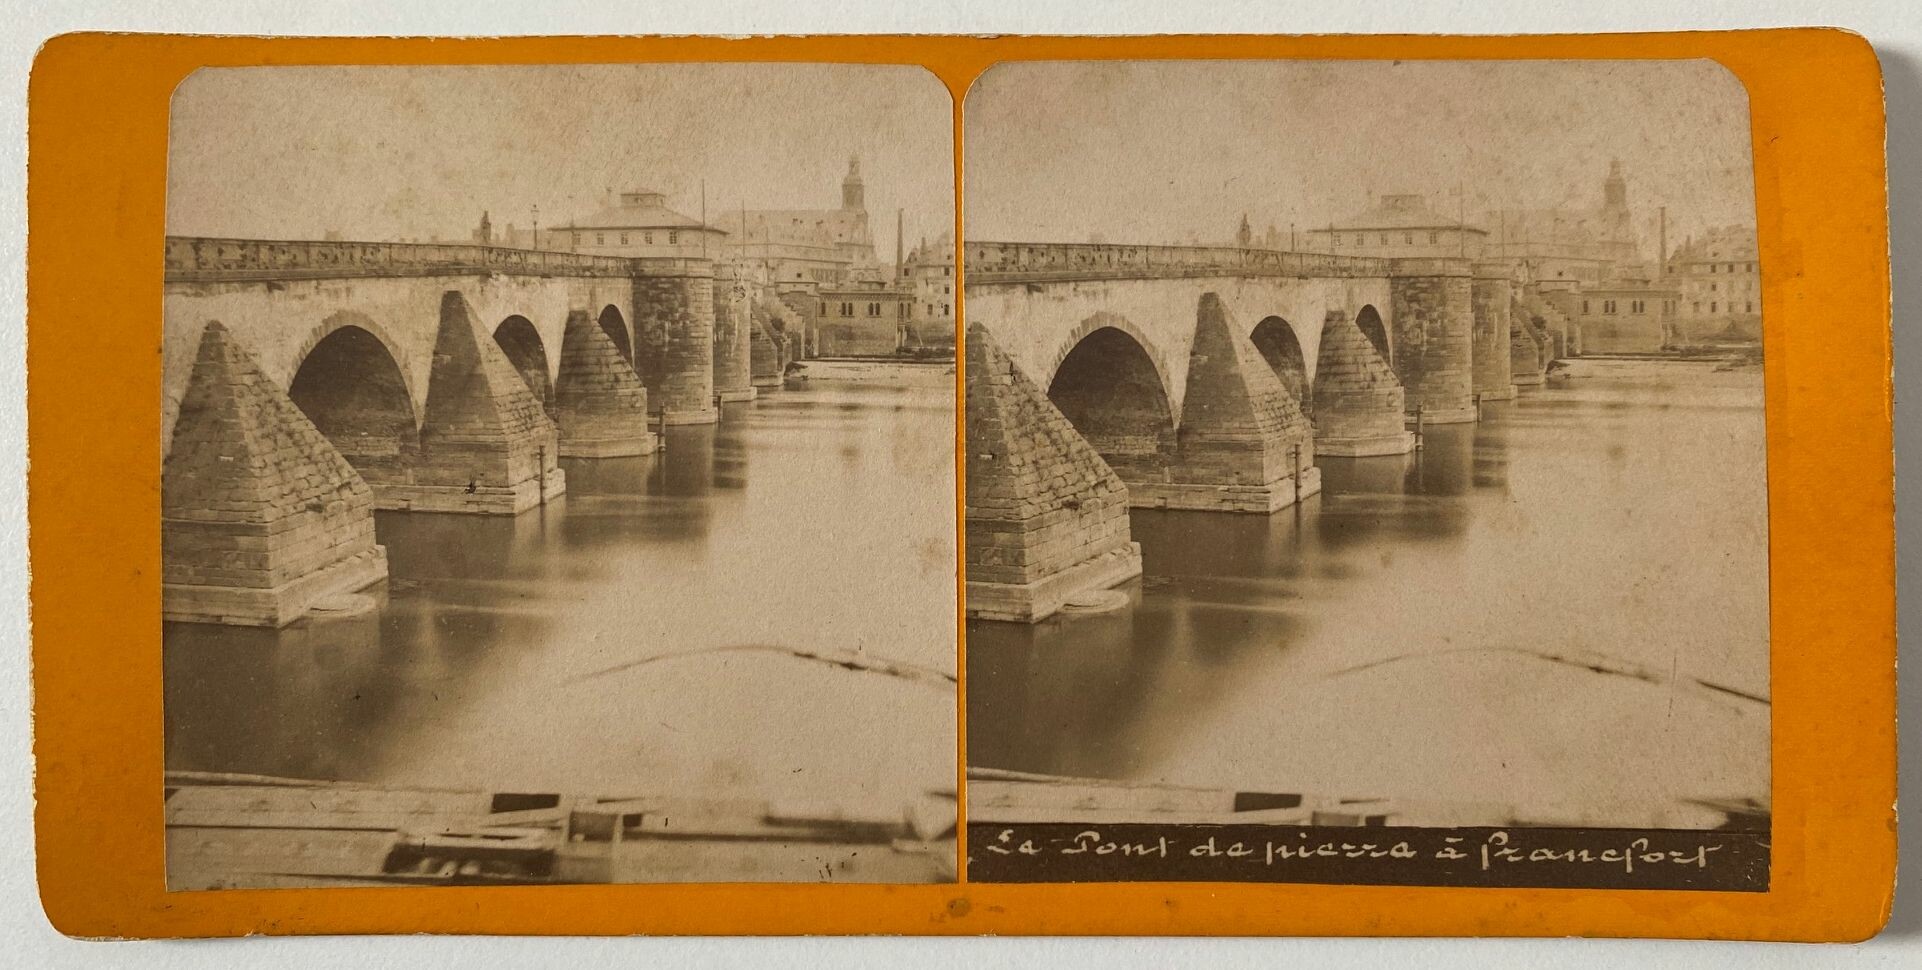 Francfort, La Pont de piazza a Francfort, ca. 1875 (Taunus-Rhein-Main - Regionalgeschichtliche Sammlung Dr. Stefan Naas CC BY-NC-SA)